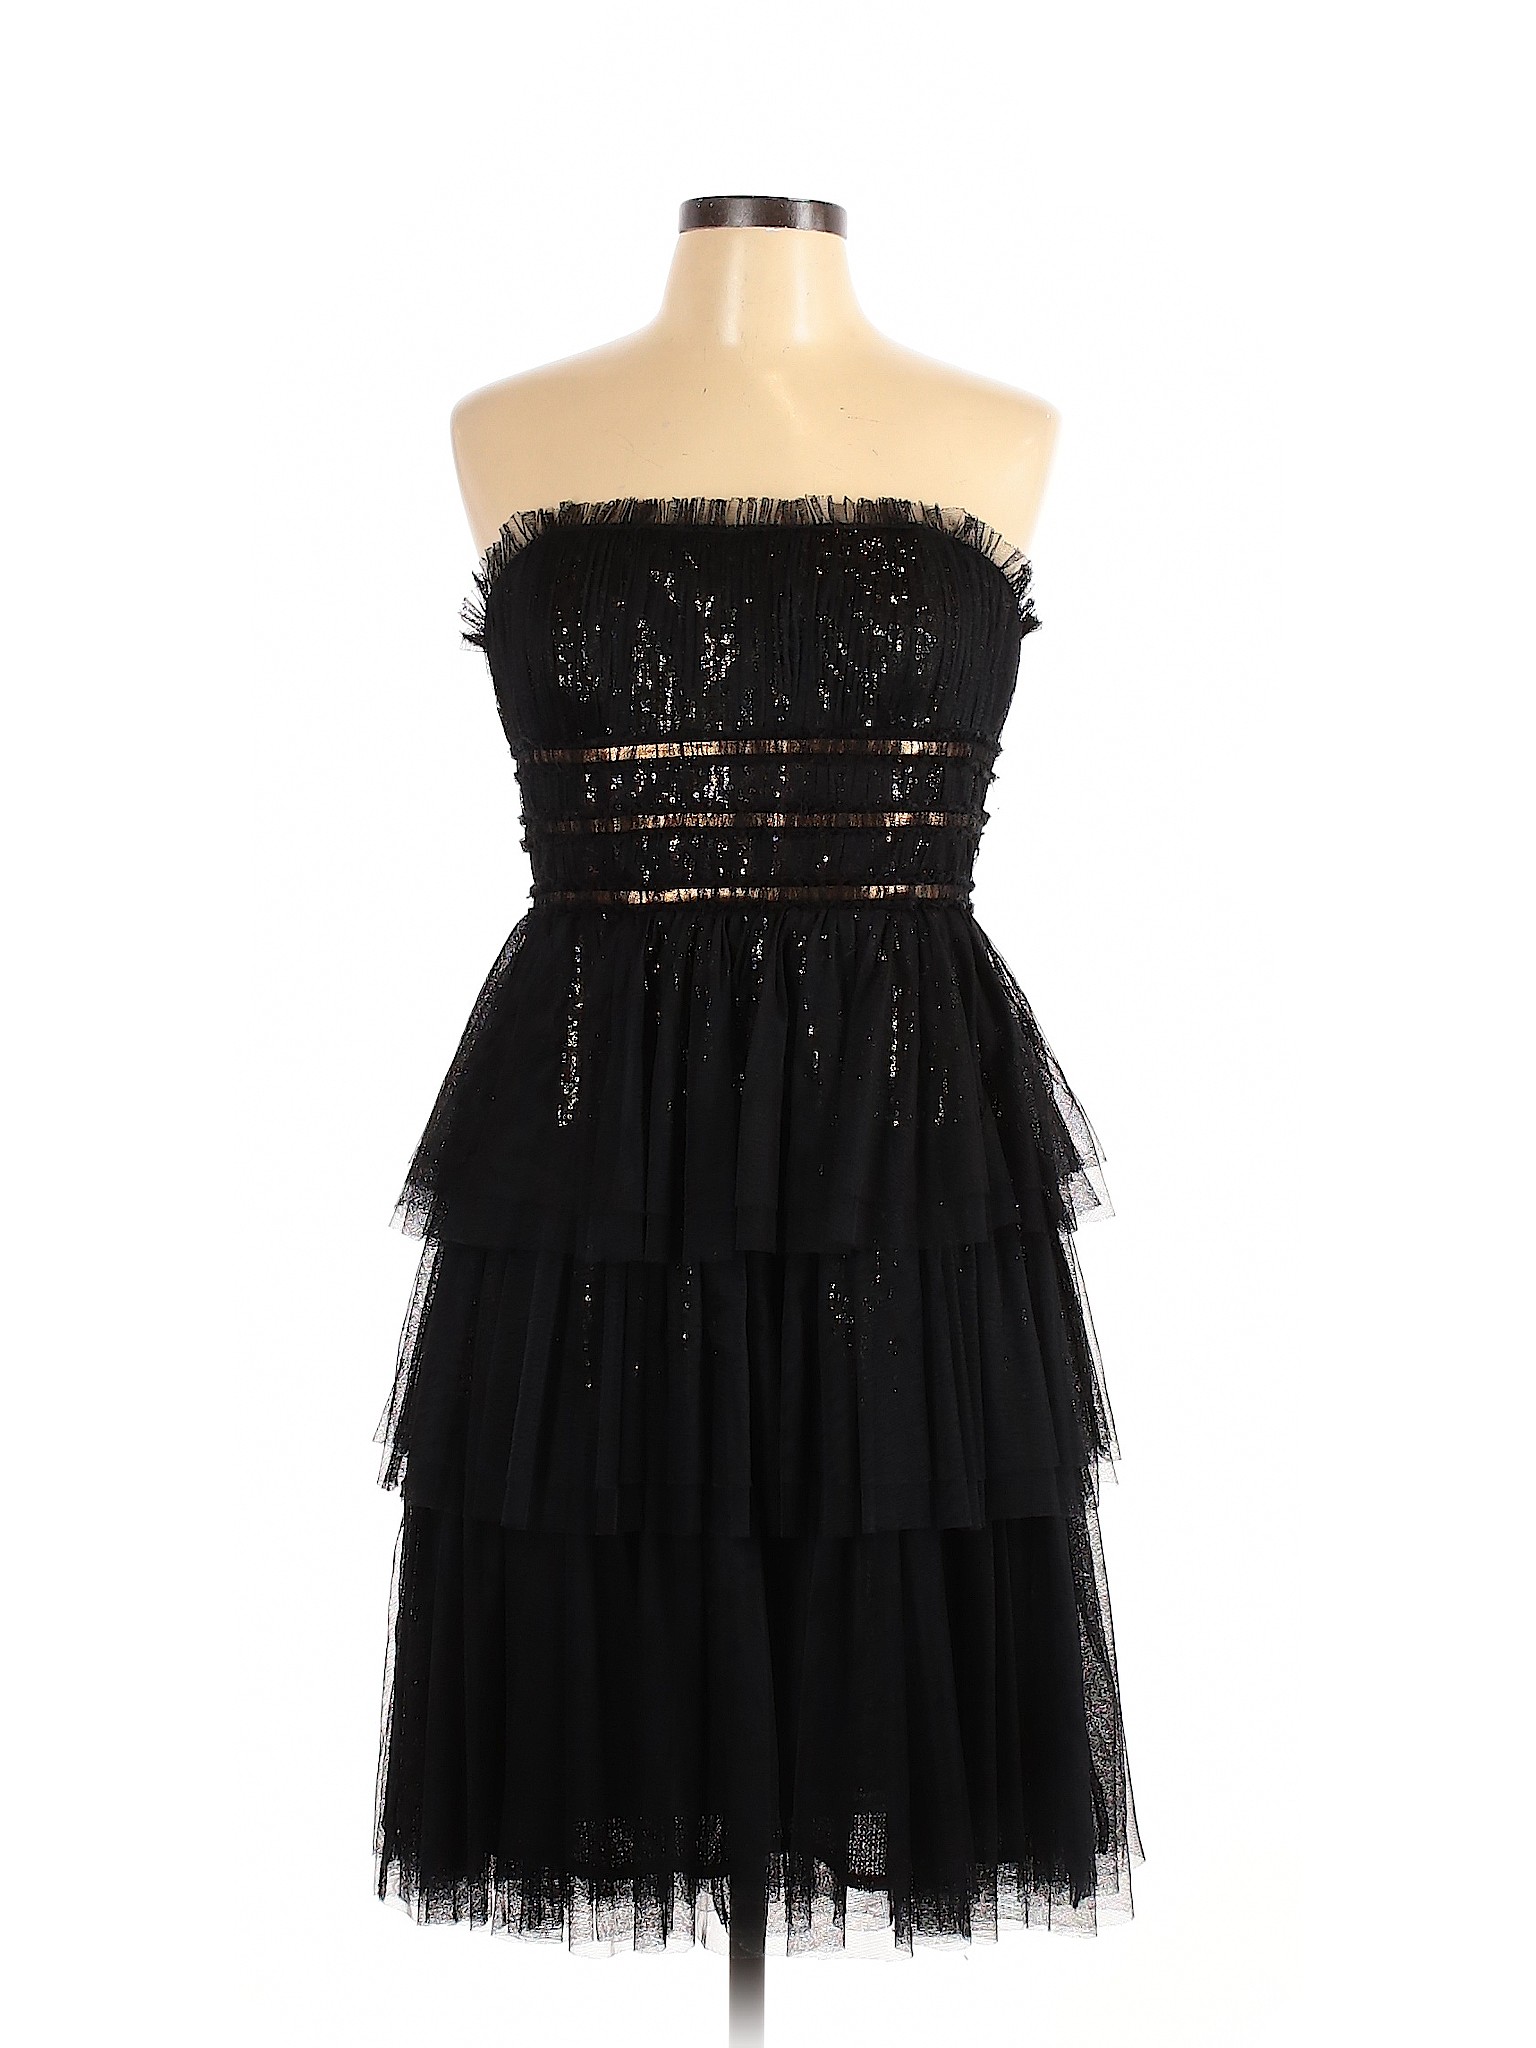 NWT ML Monique Lhuillier Women Black Cocktail Dress 10 | eBay